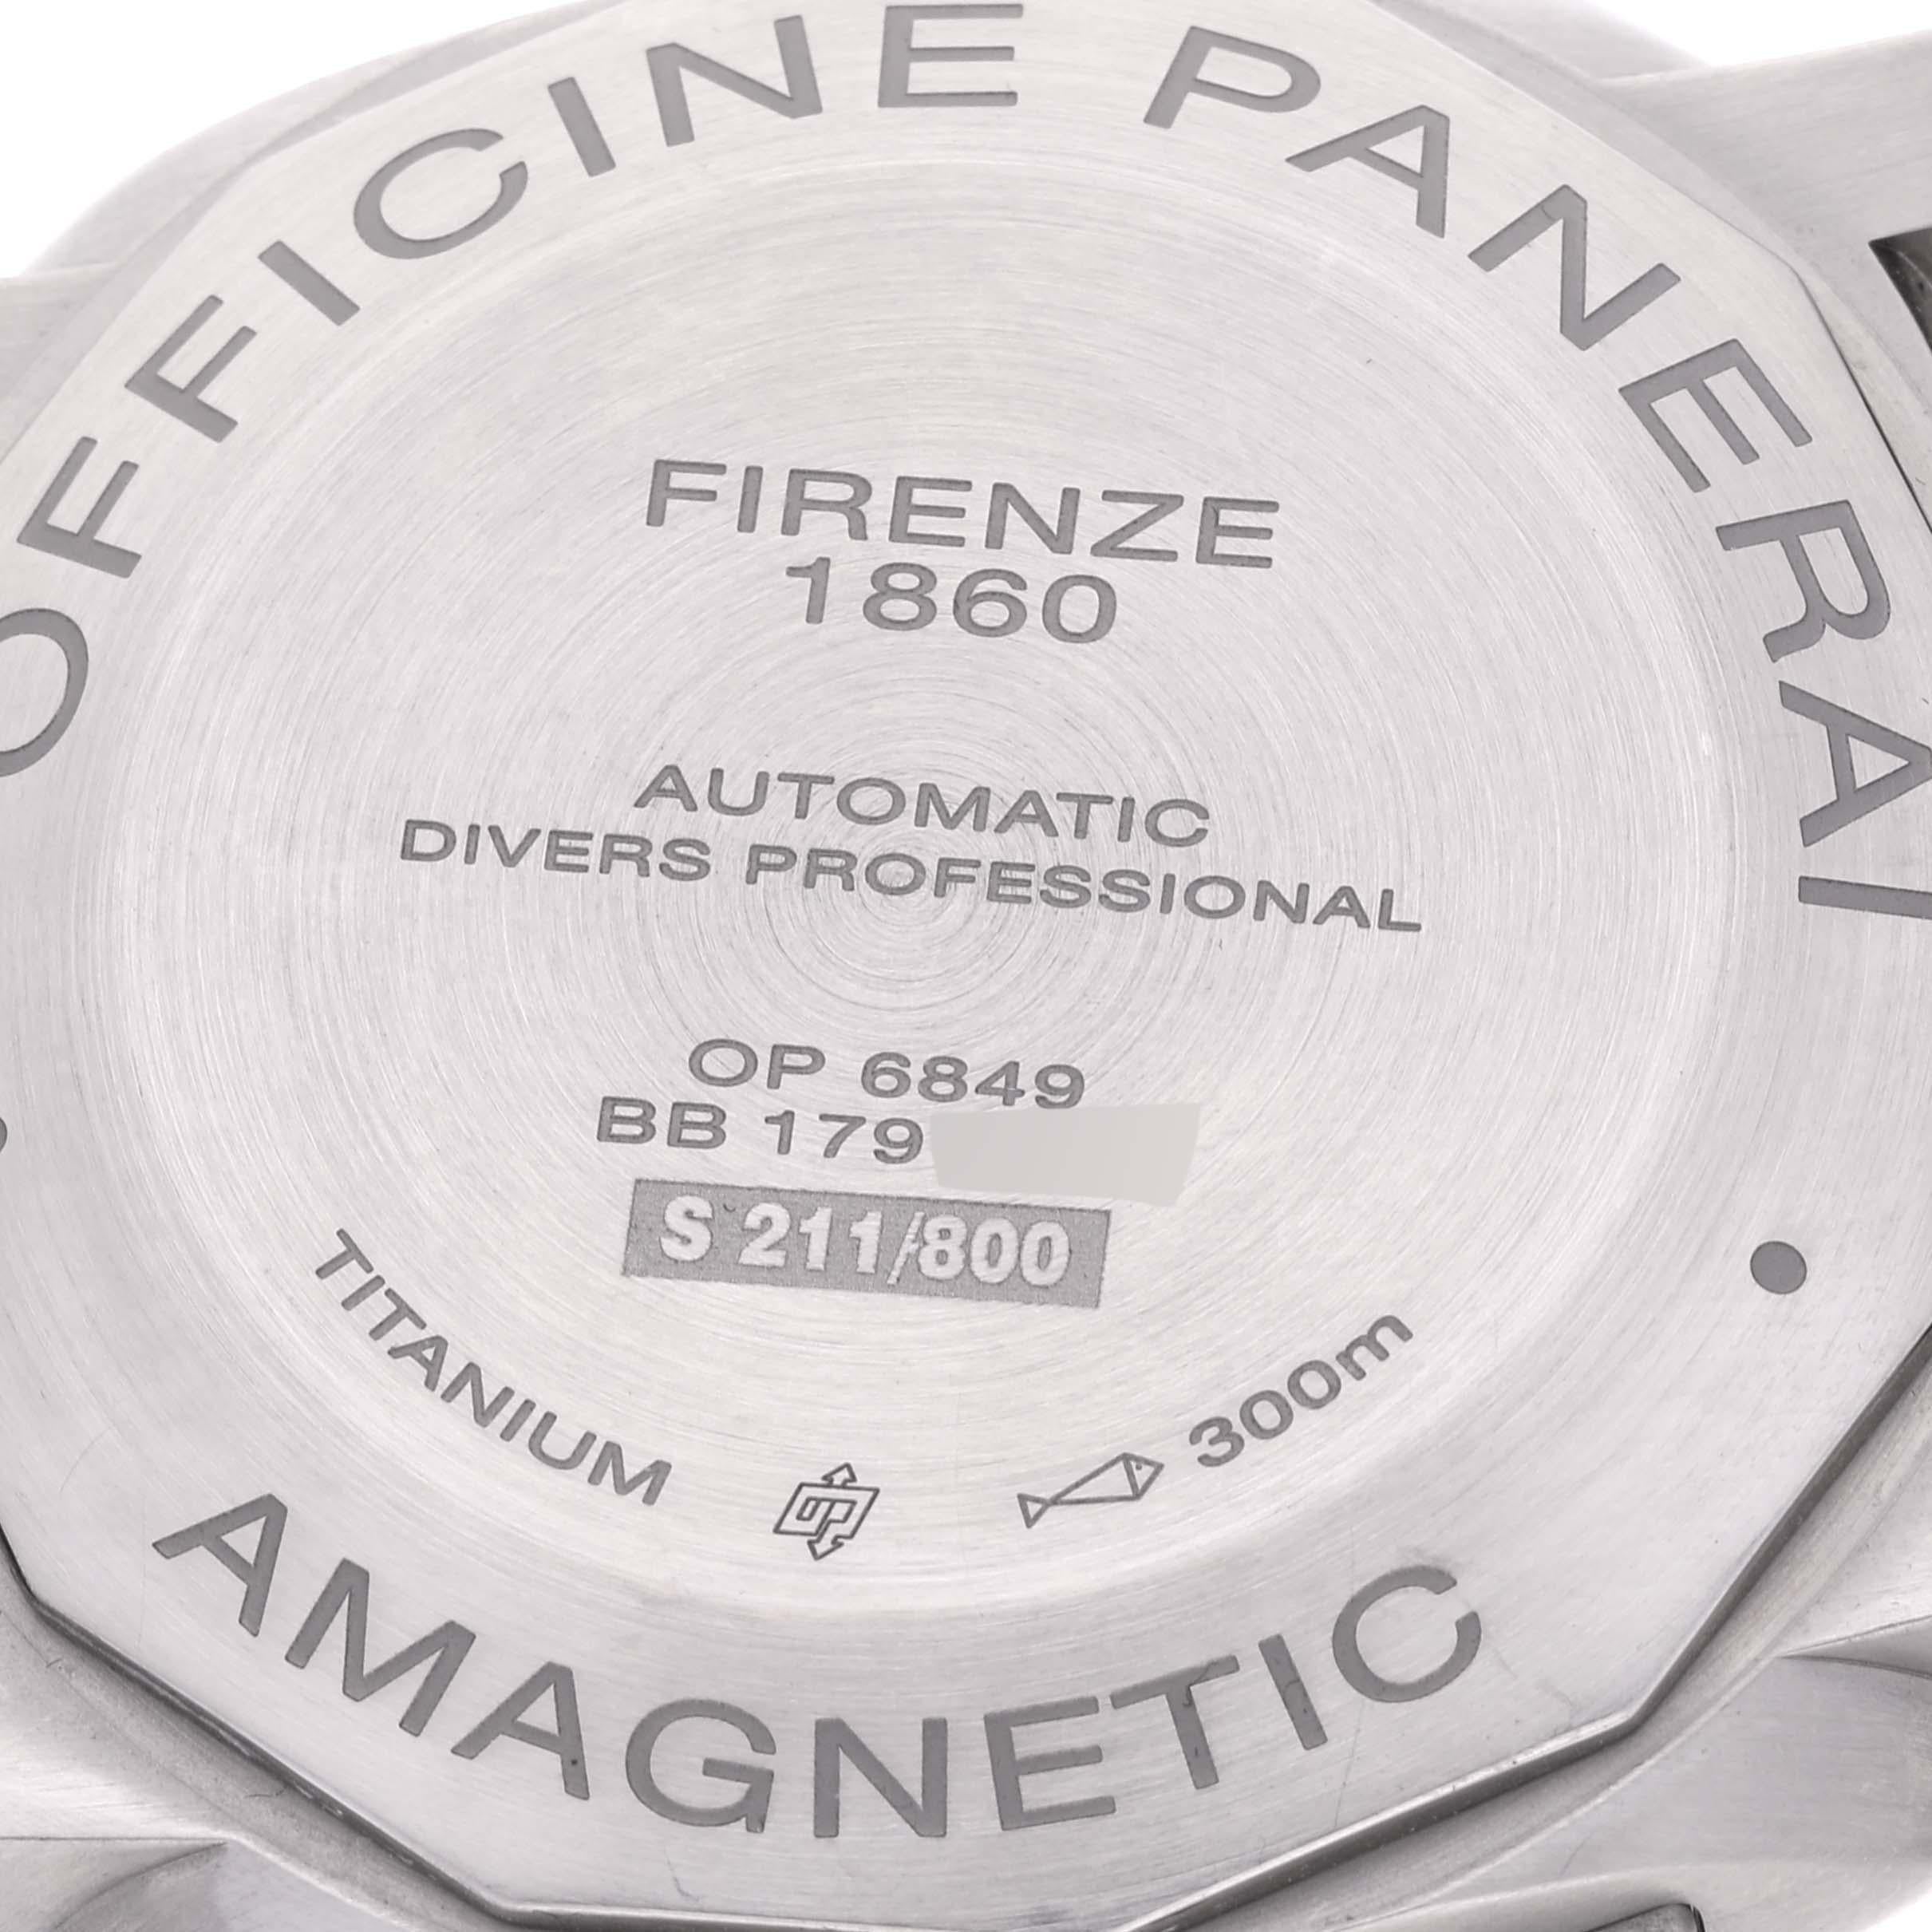 Panerai Luminor Submersible 1950 Titanium Amagnetic Watch PAM00389 Box Papers 2